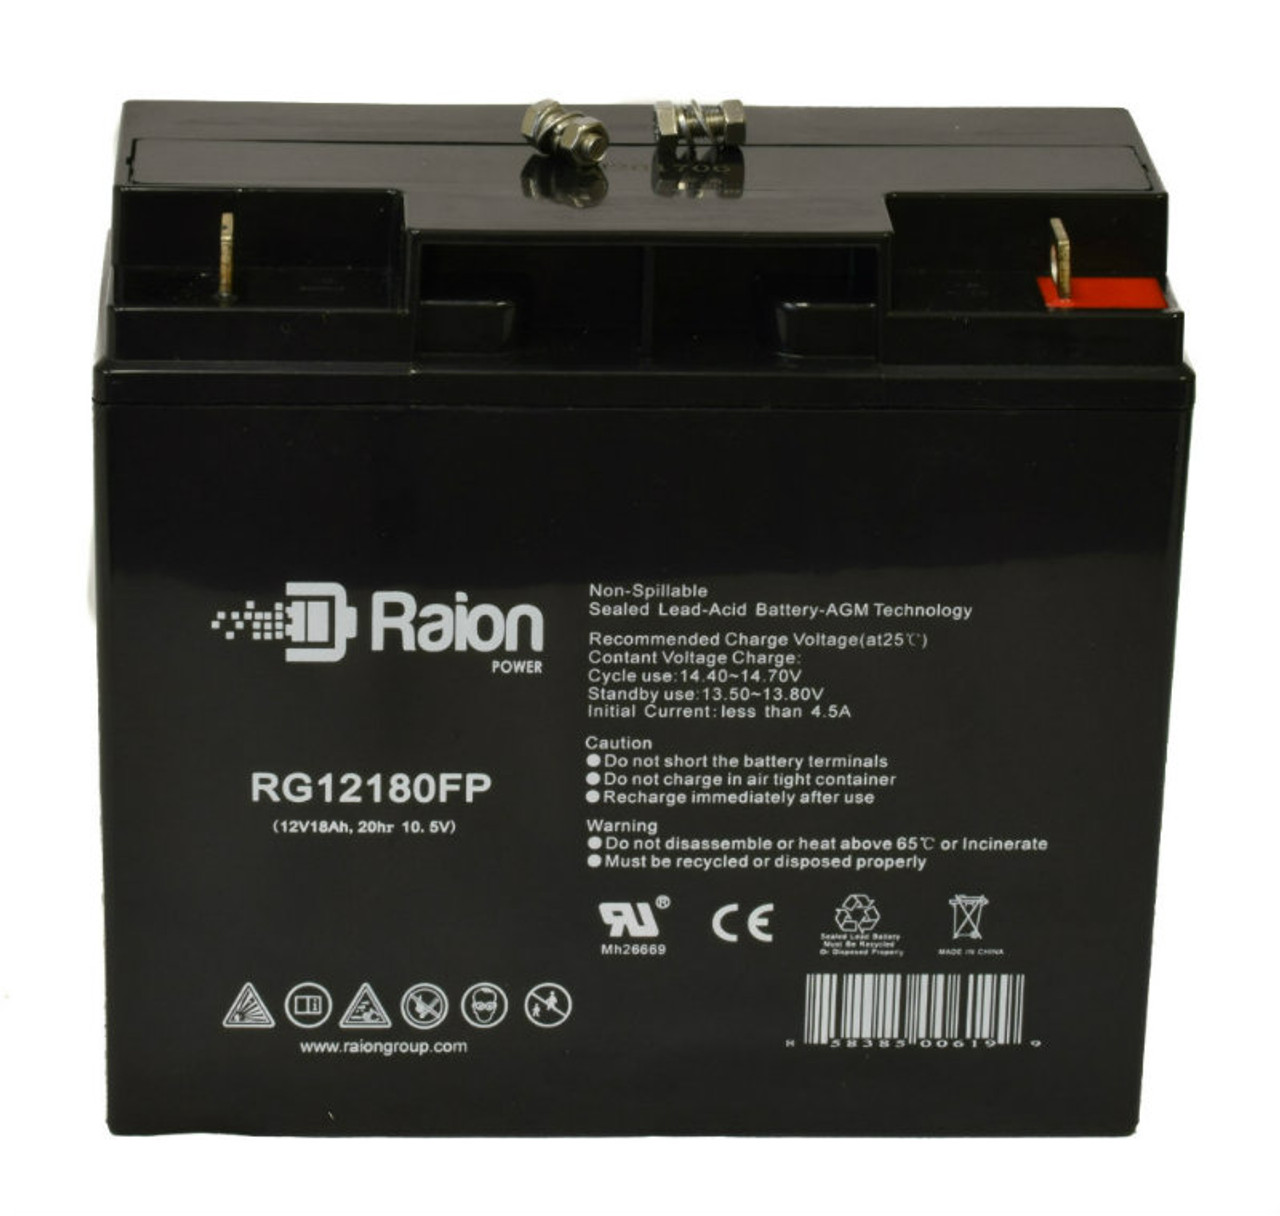 Raion Power RG12180FP 12V 18Ah Lead Acid Battery for Daymak Odyssey